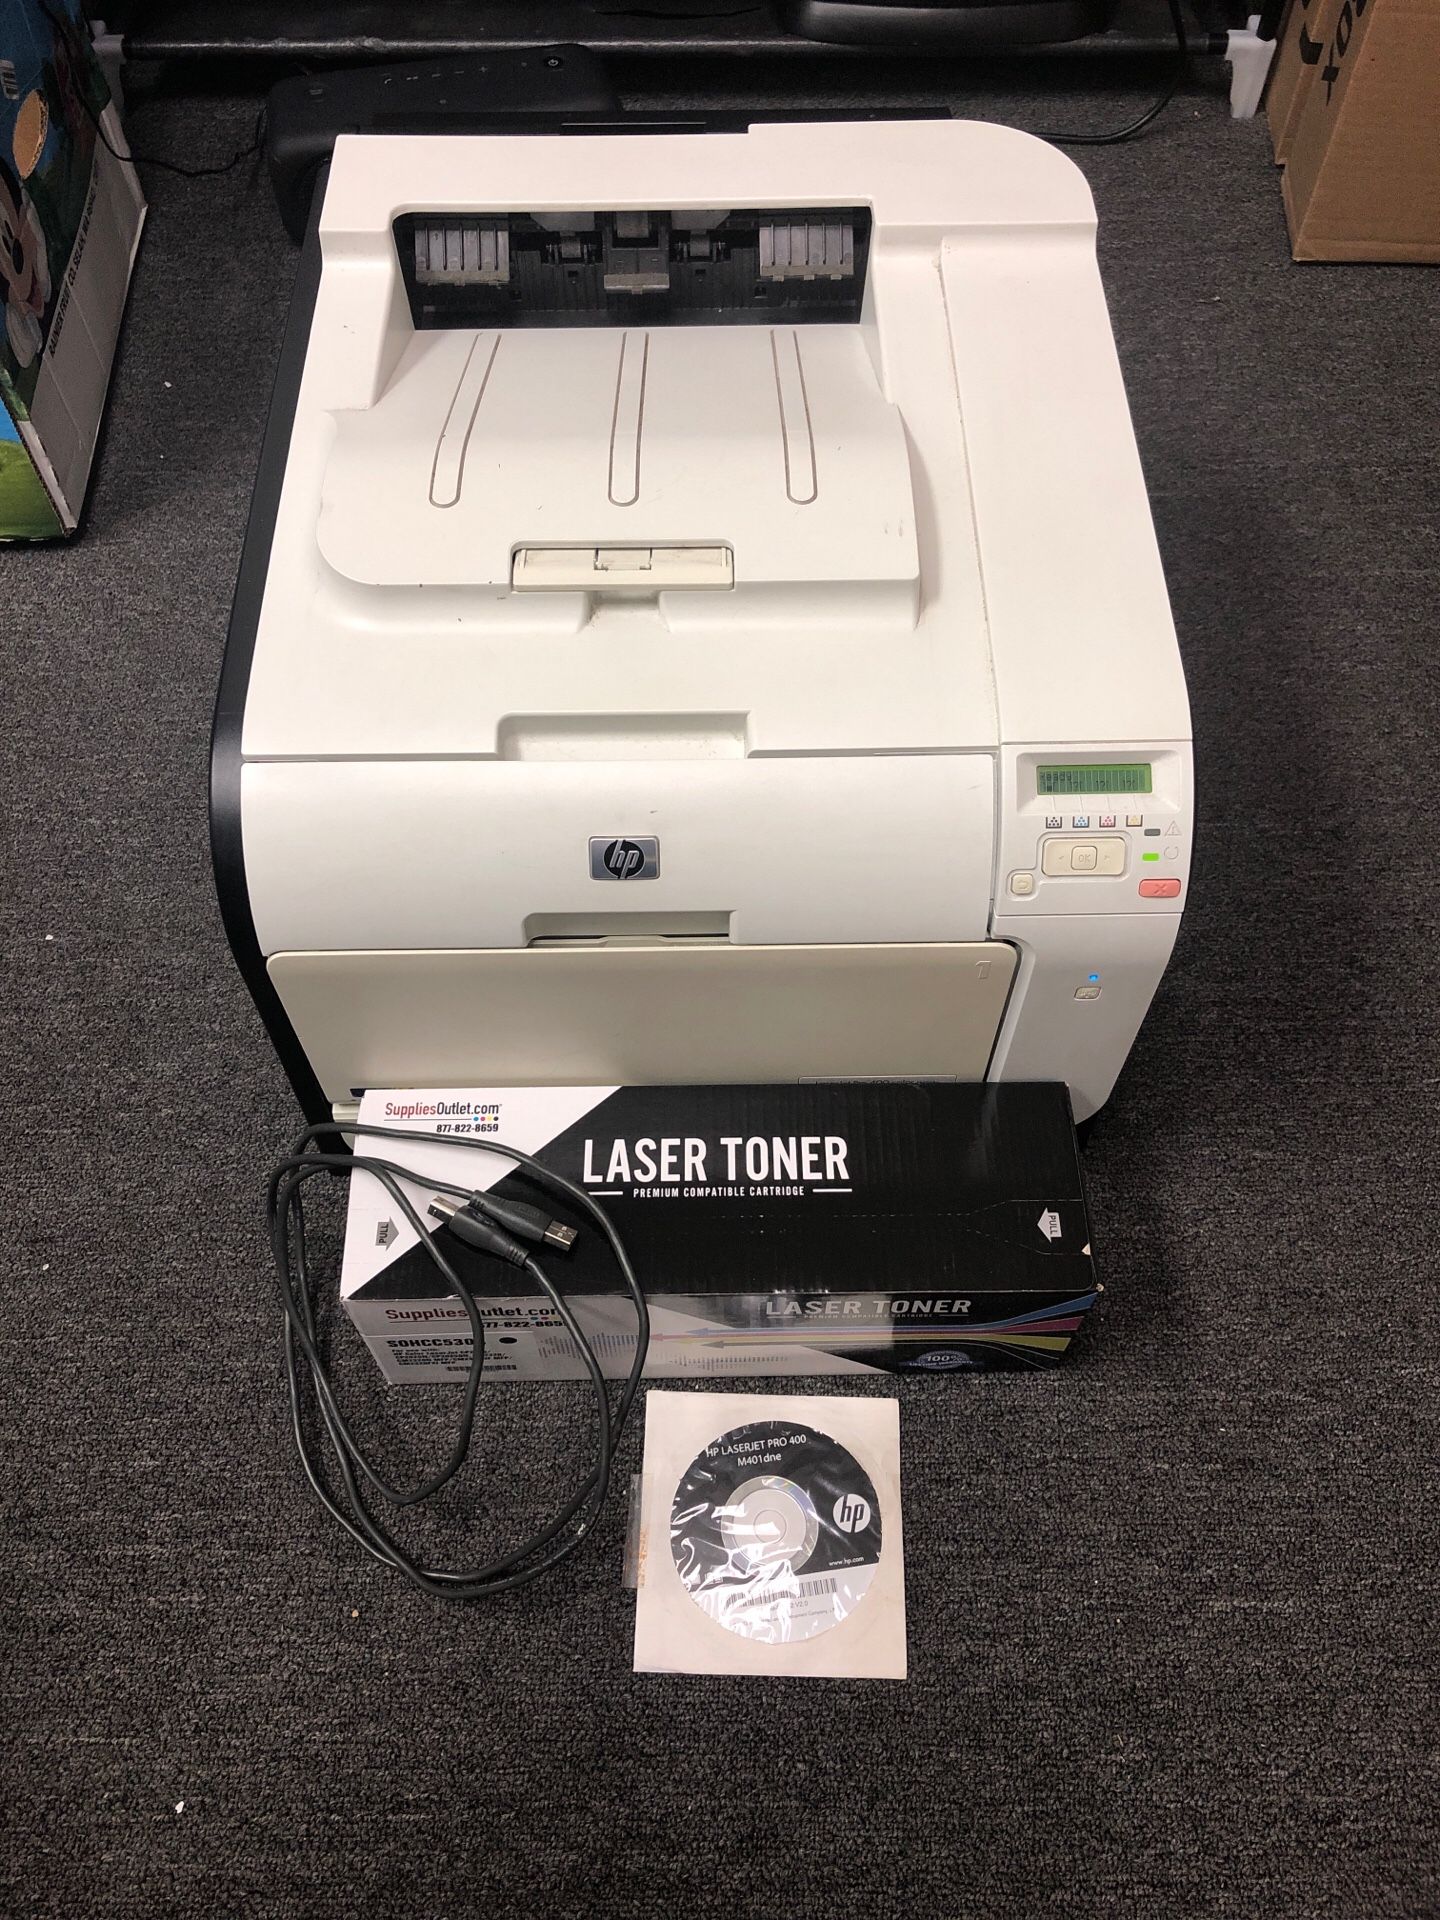 hp LaserJet Pro 400 color M451 wireless printer